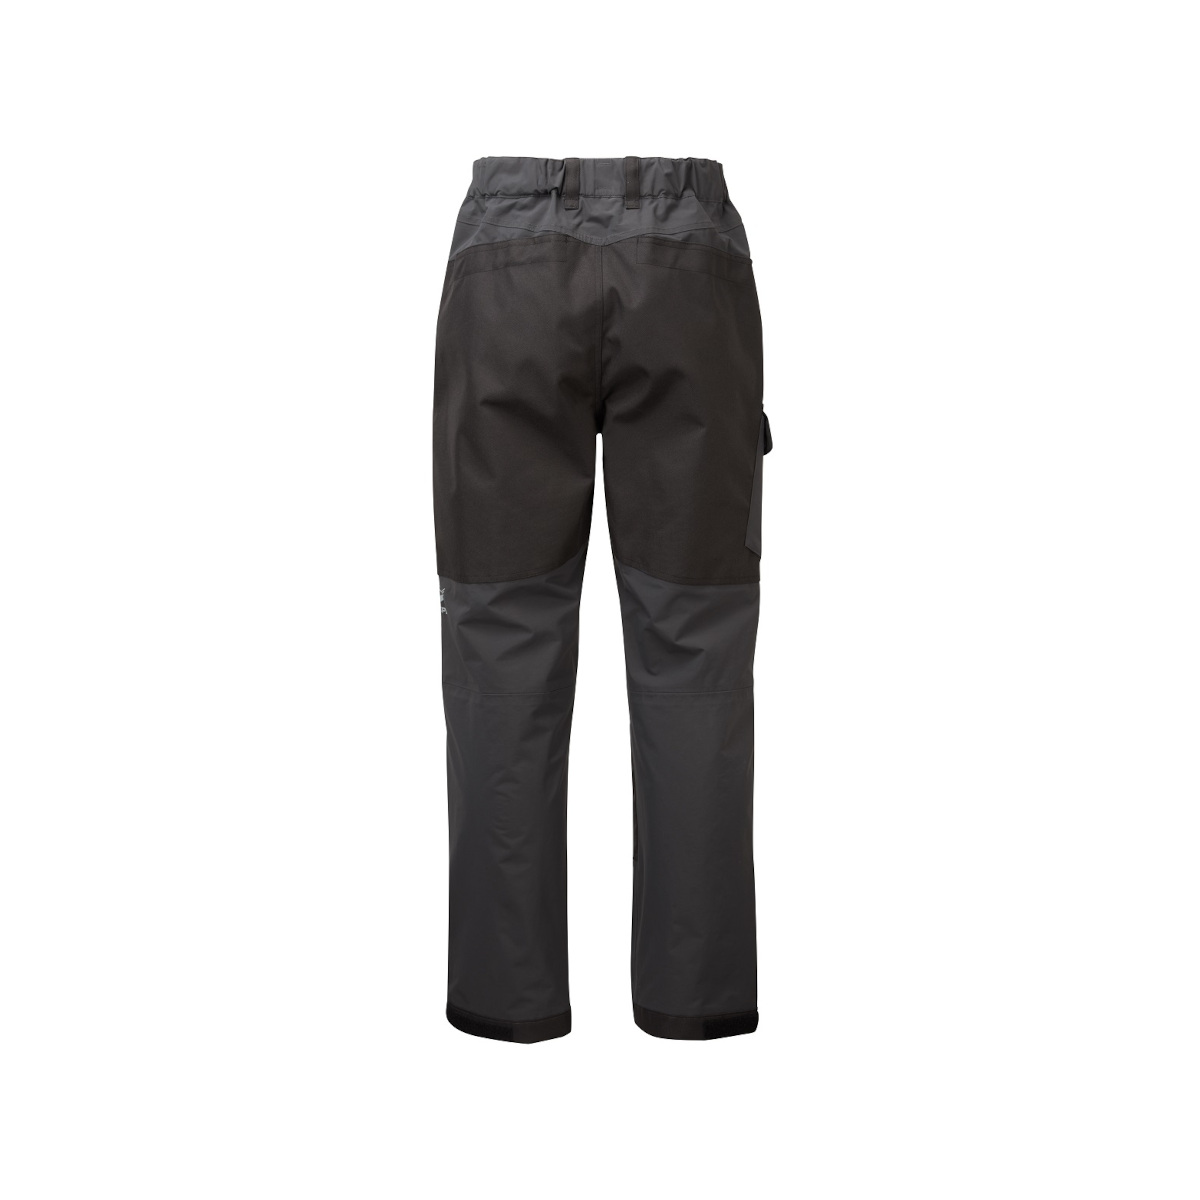 Gill OS32 Coastal pantalon de quart, homme - graphite, taille XXL